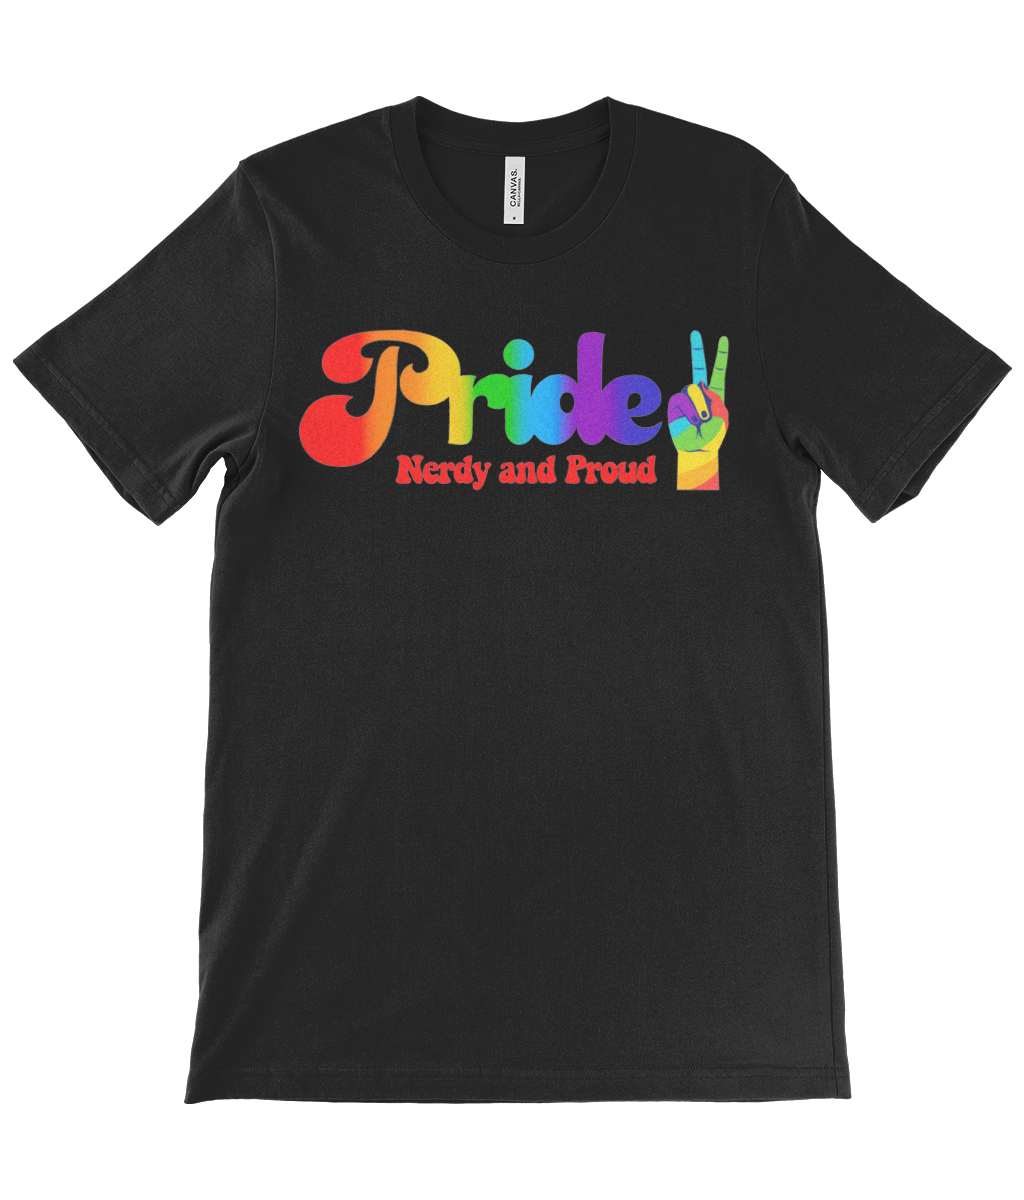 Nerdy and Proud Pride Unisex Crew Neck T-Shirt